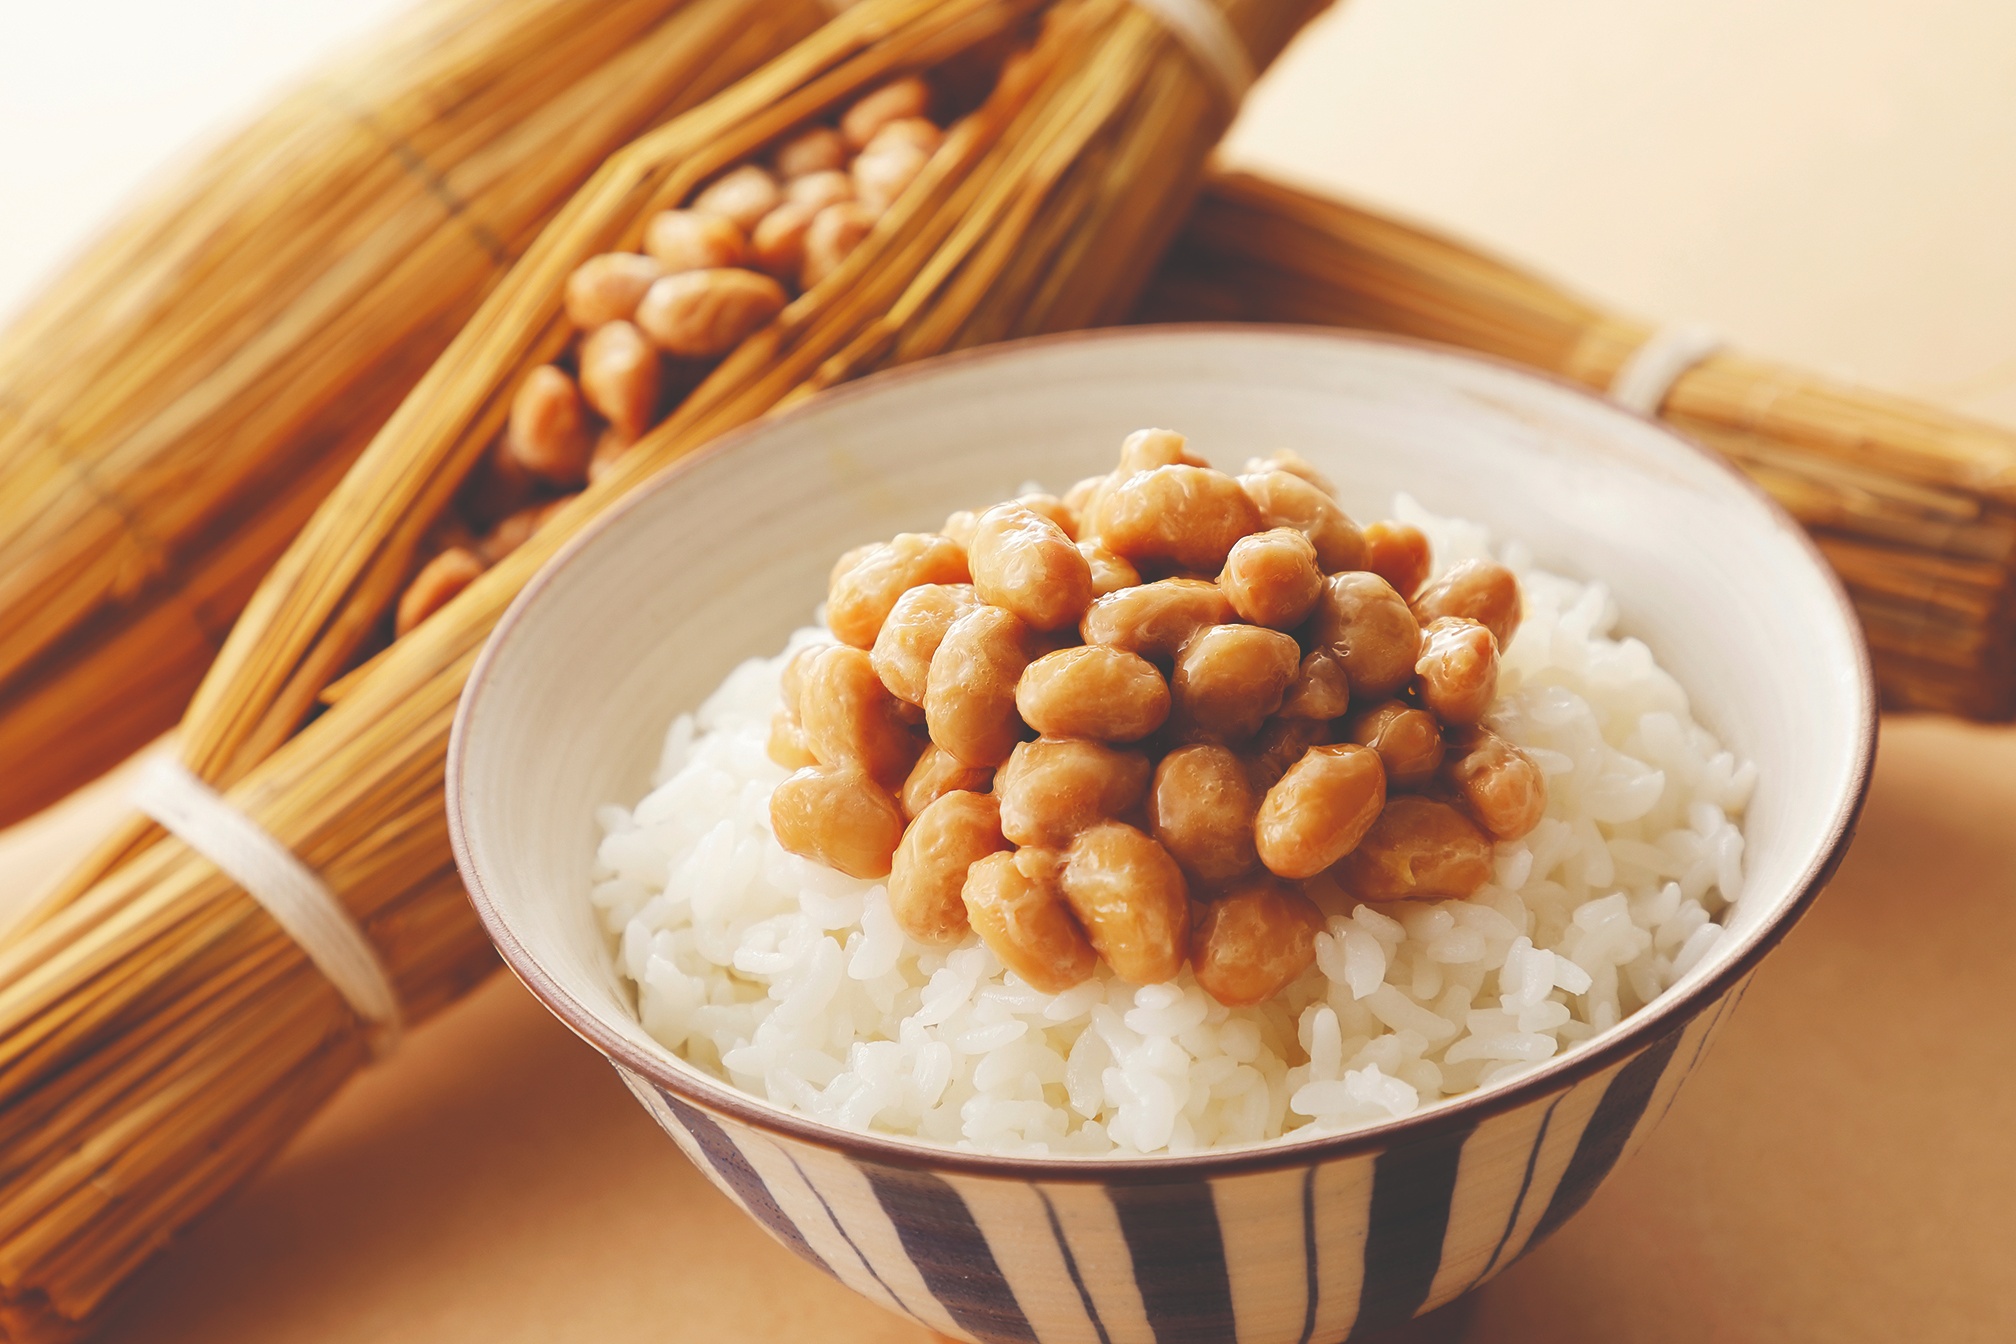 Japanese Natto is rich in vitamin K2